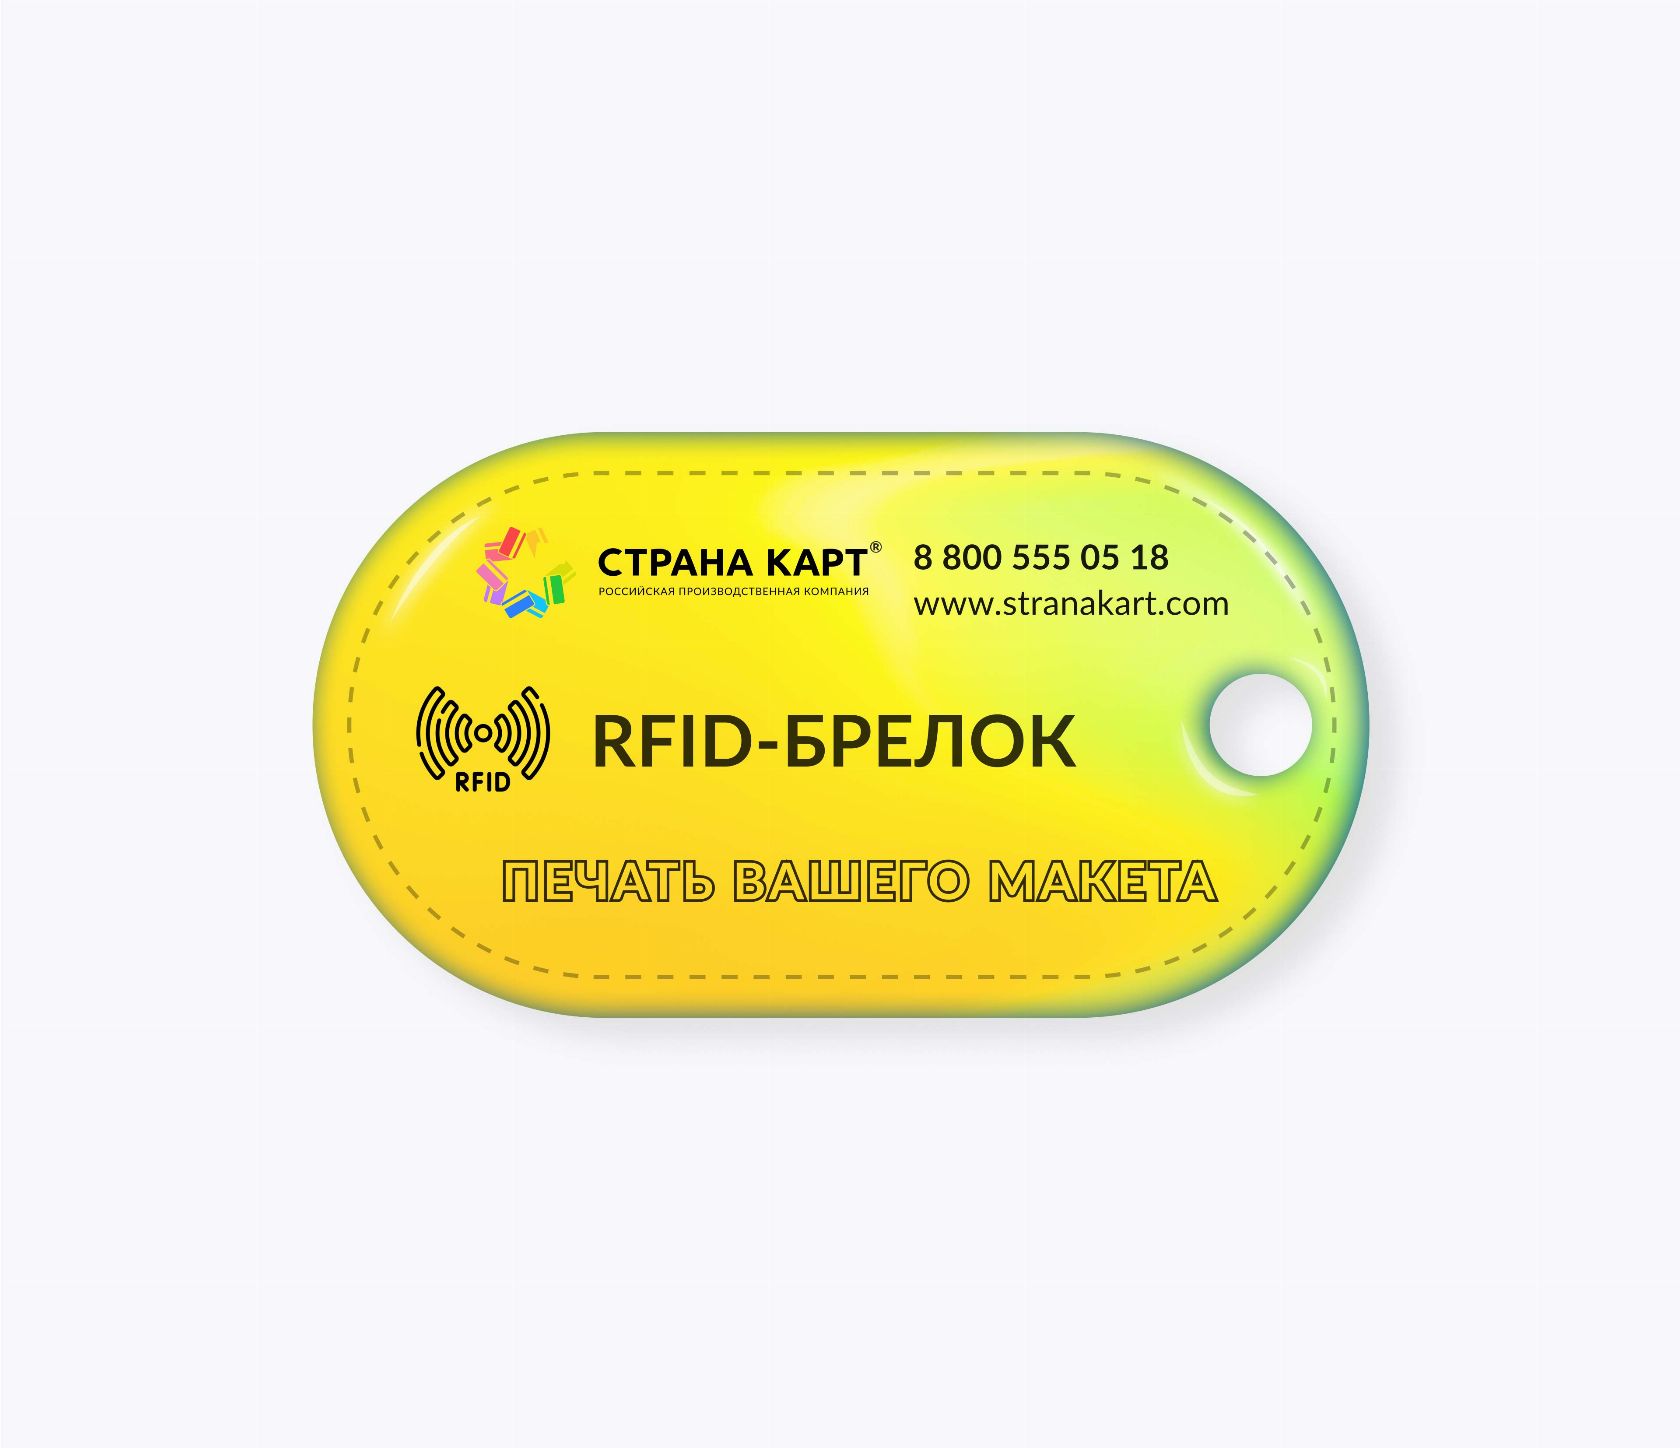 Овальные RFID-брелоки NEOKEY® с чипом SMARTTAG 1k 7 byte UID RFID-брелоки NEOKEY® с чипом SMARTTAG 1k 7 byte UID